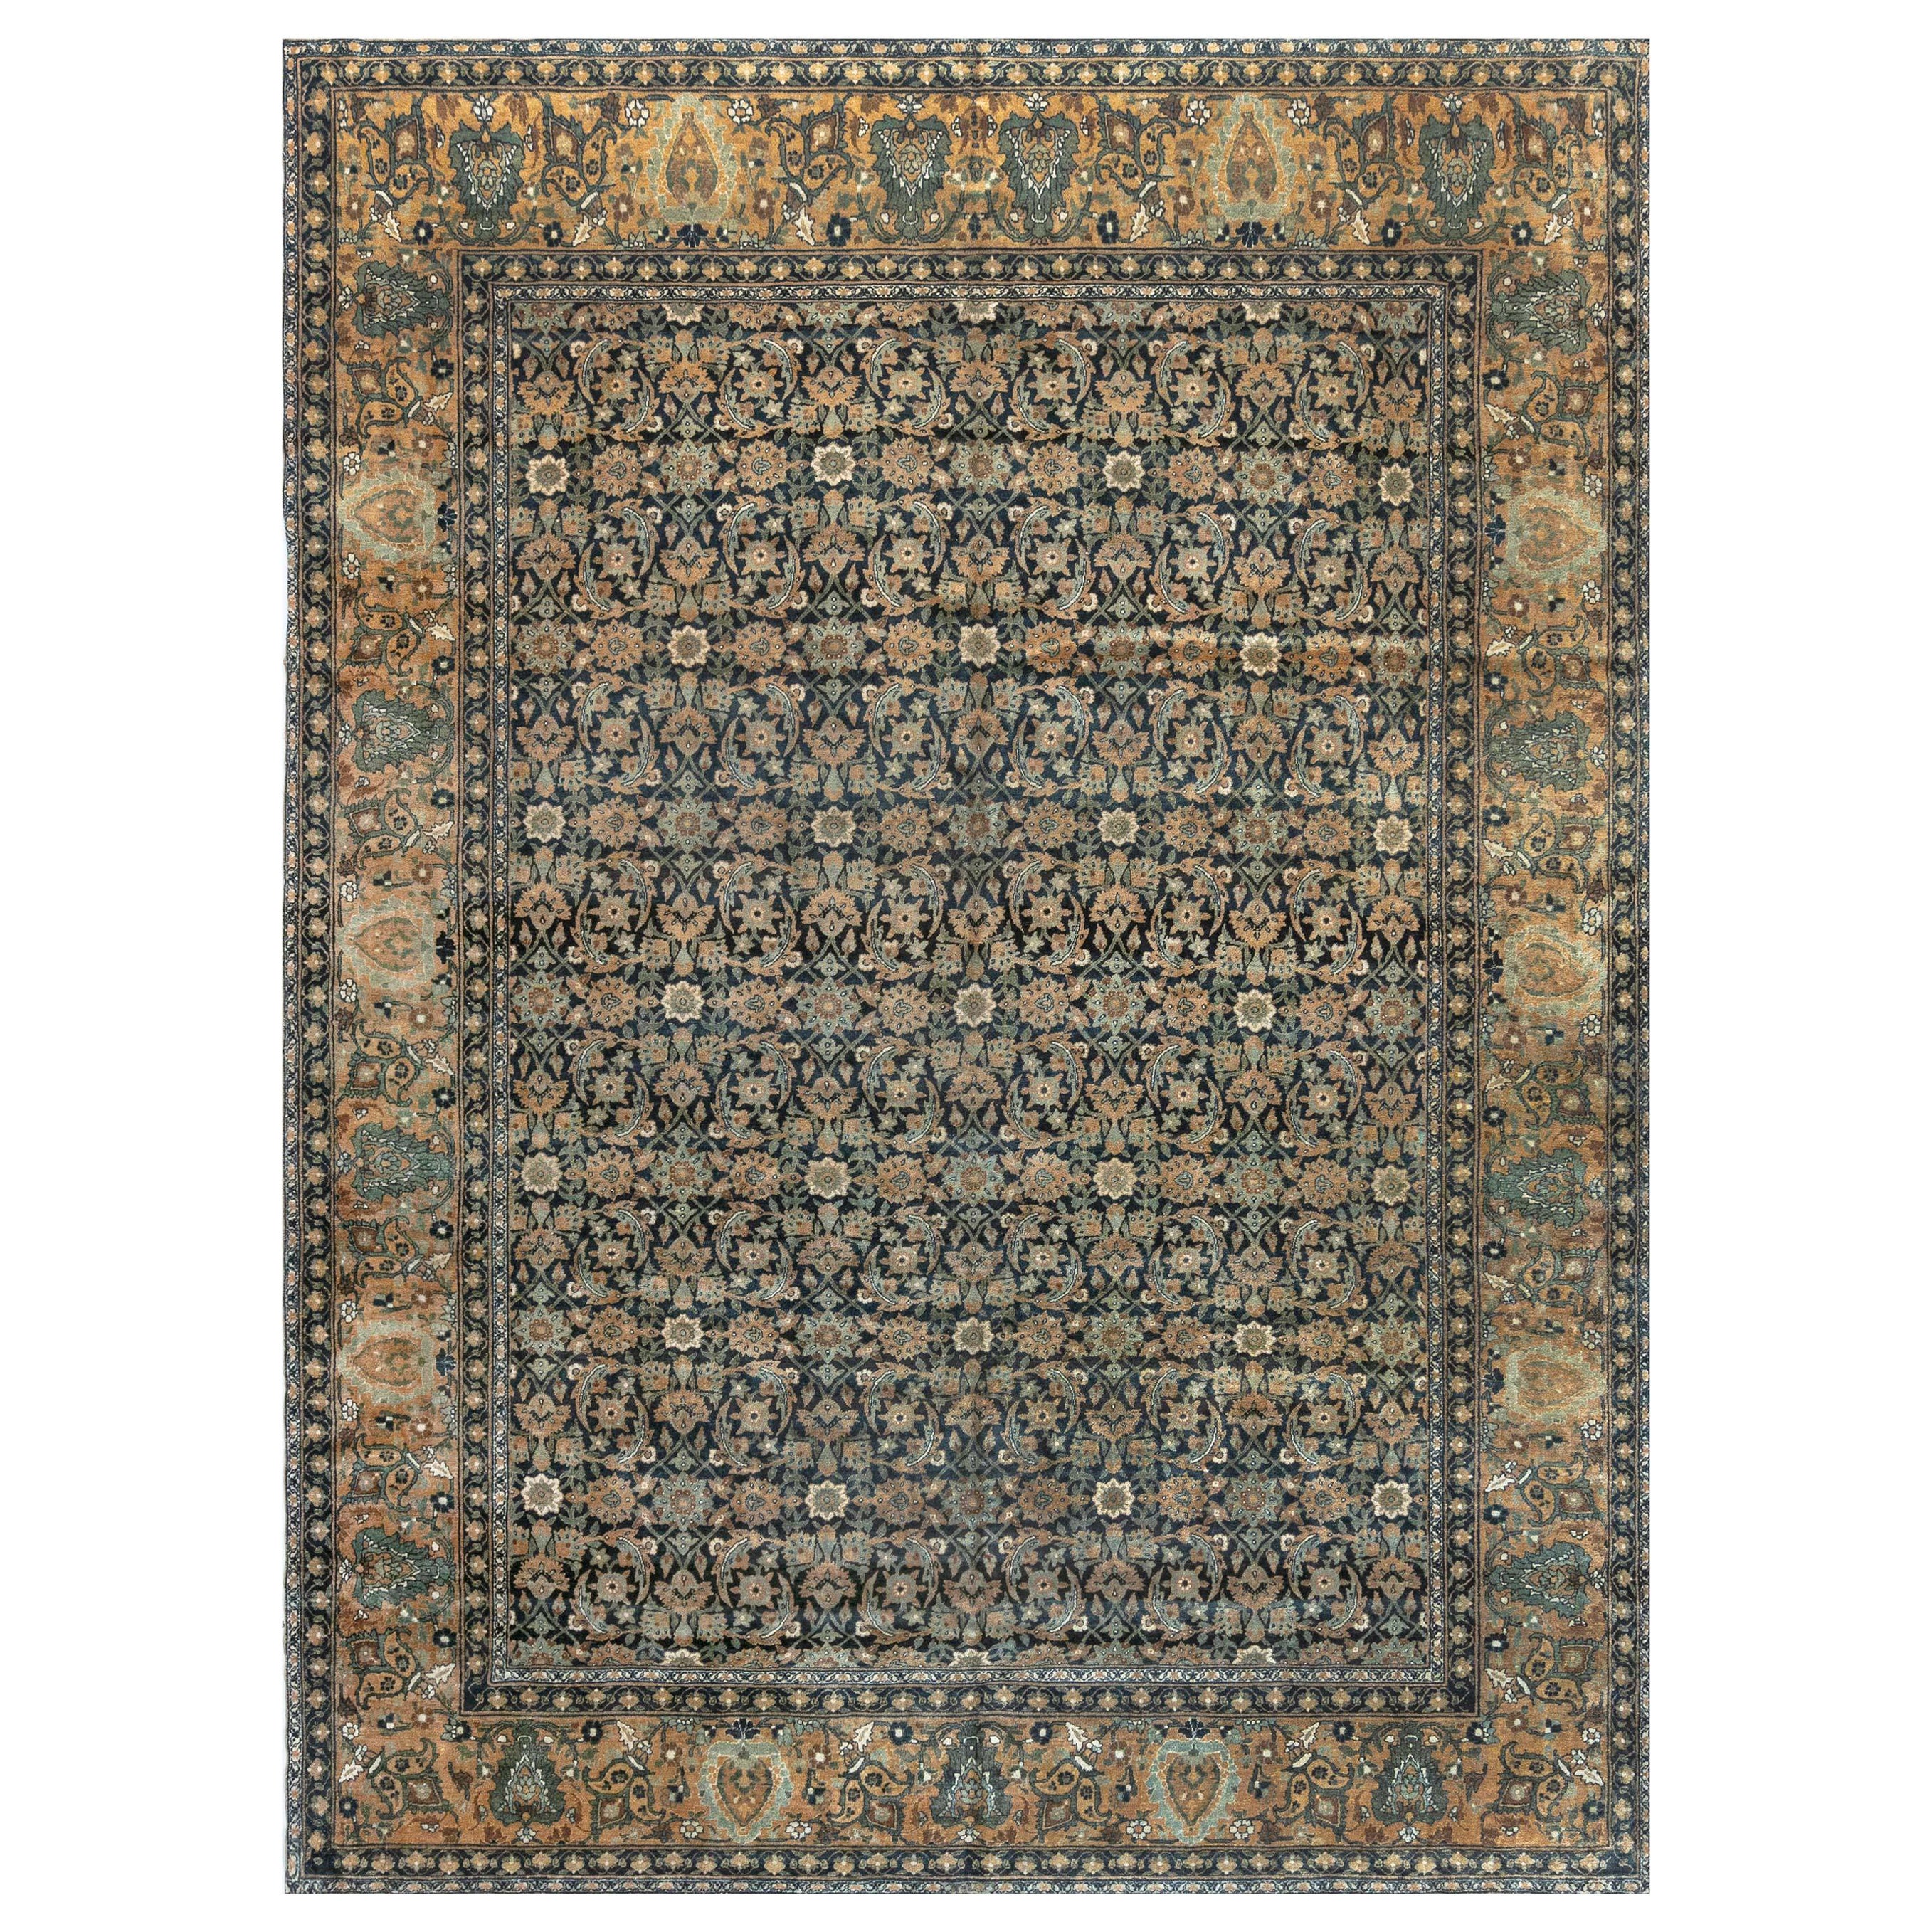 Early 20th Century Persian Kirman Handmade Wool Rug